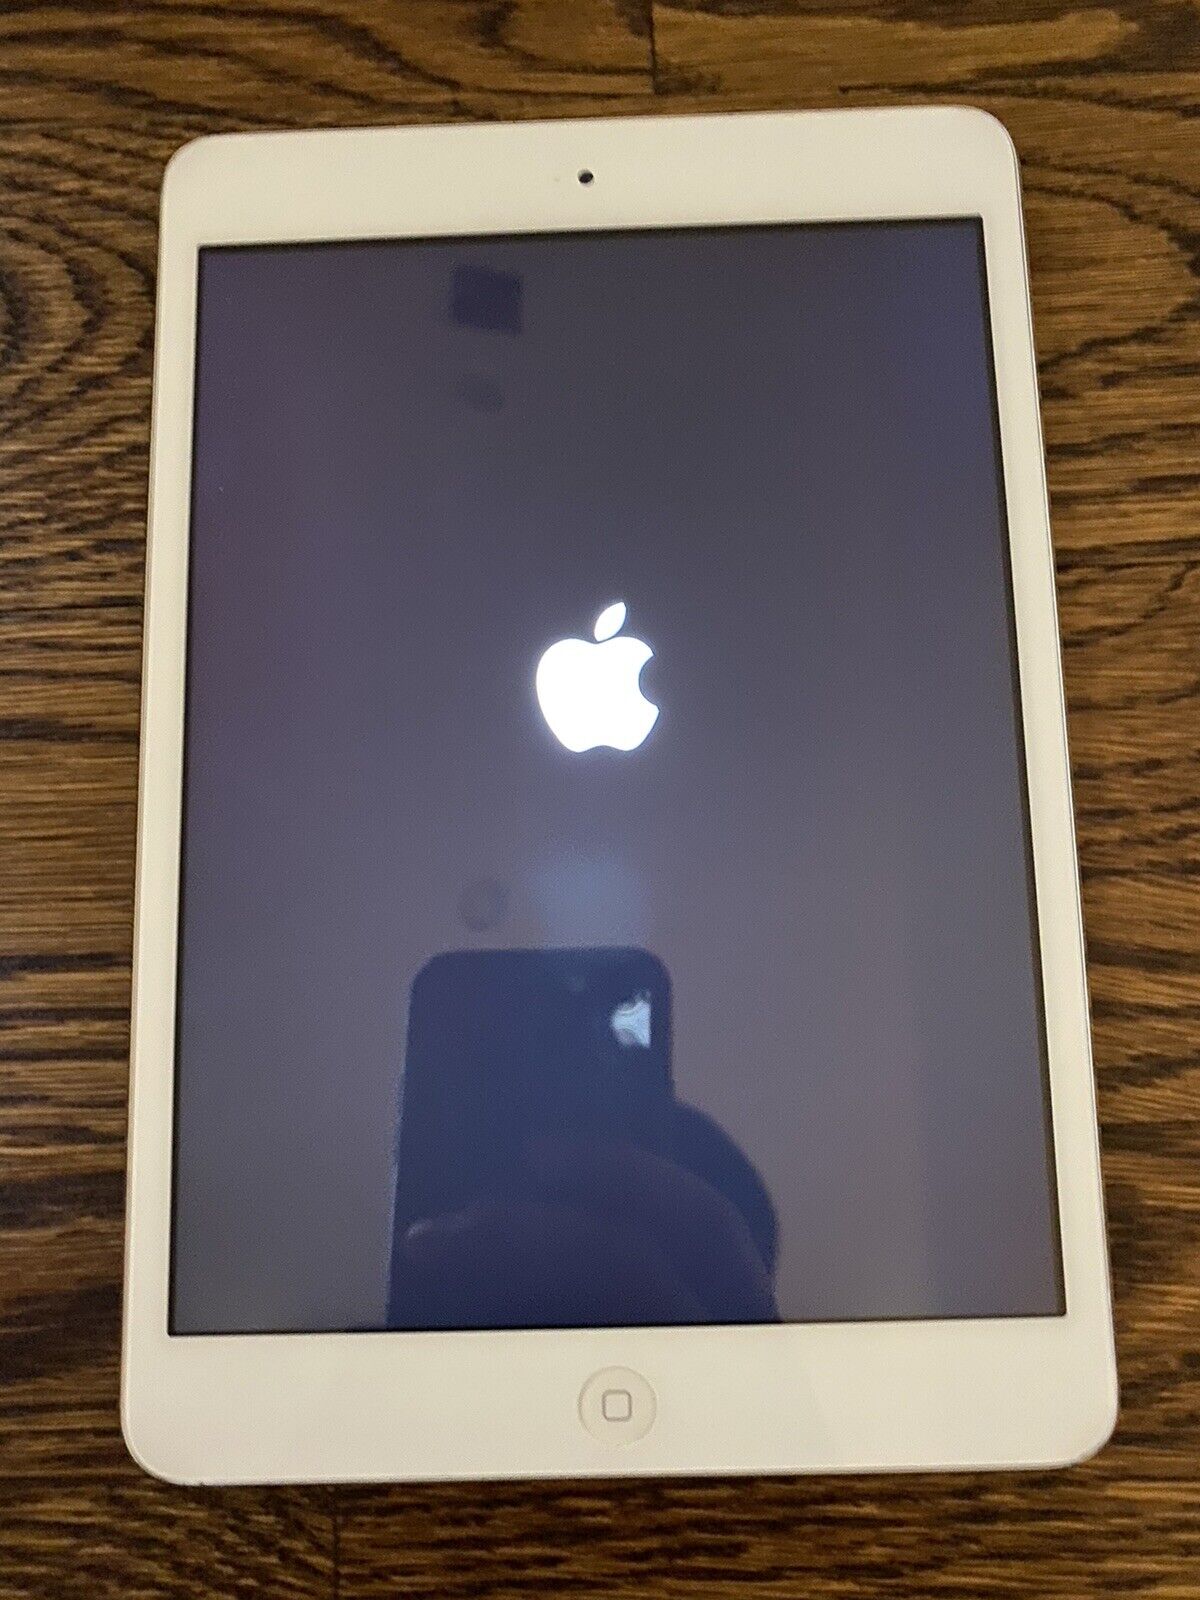 sav Låse Adskillelse Apple iPad mini 1st Gen. 16GB, Wi-Fi (Model A1432) Tablet | eBay